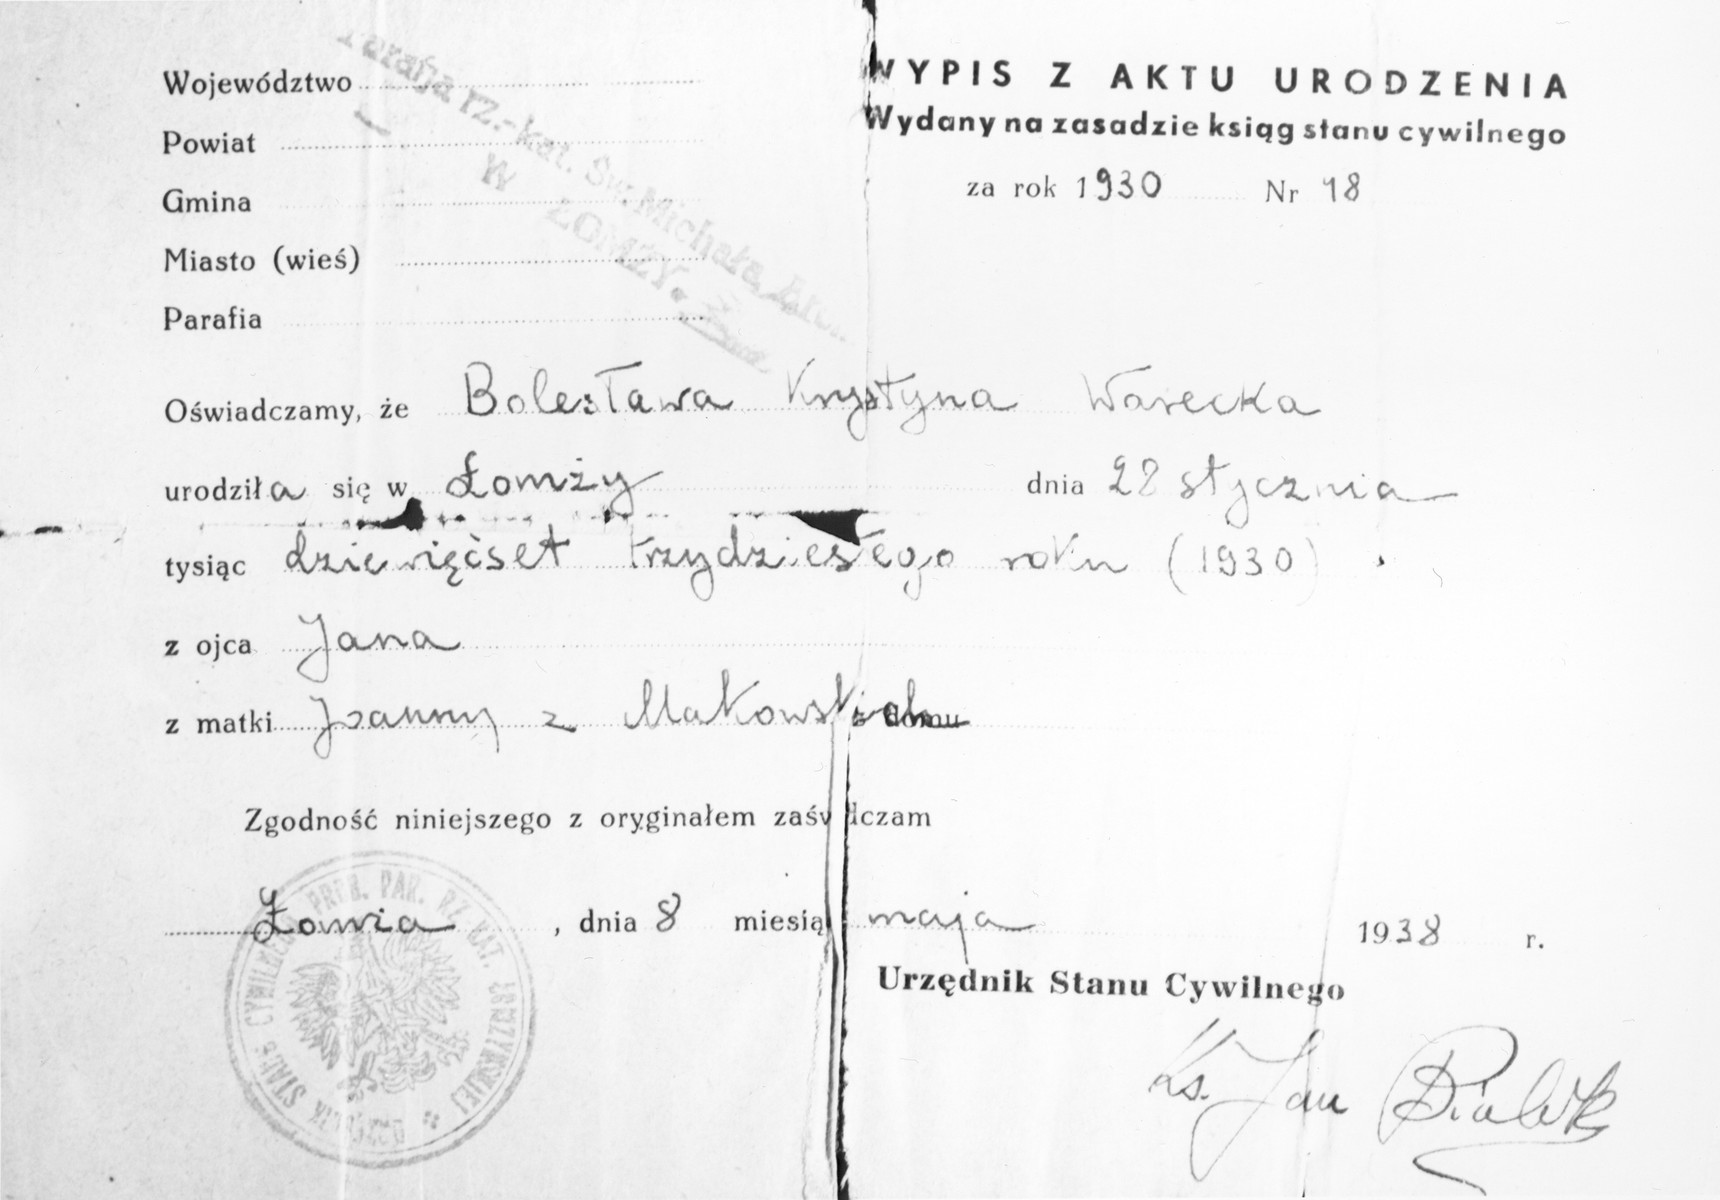 False birth certificate, issued to Bianka Rozenman, the donor, in the name of Boleslawa Krystyna Warecka.